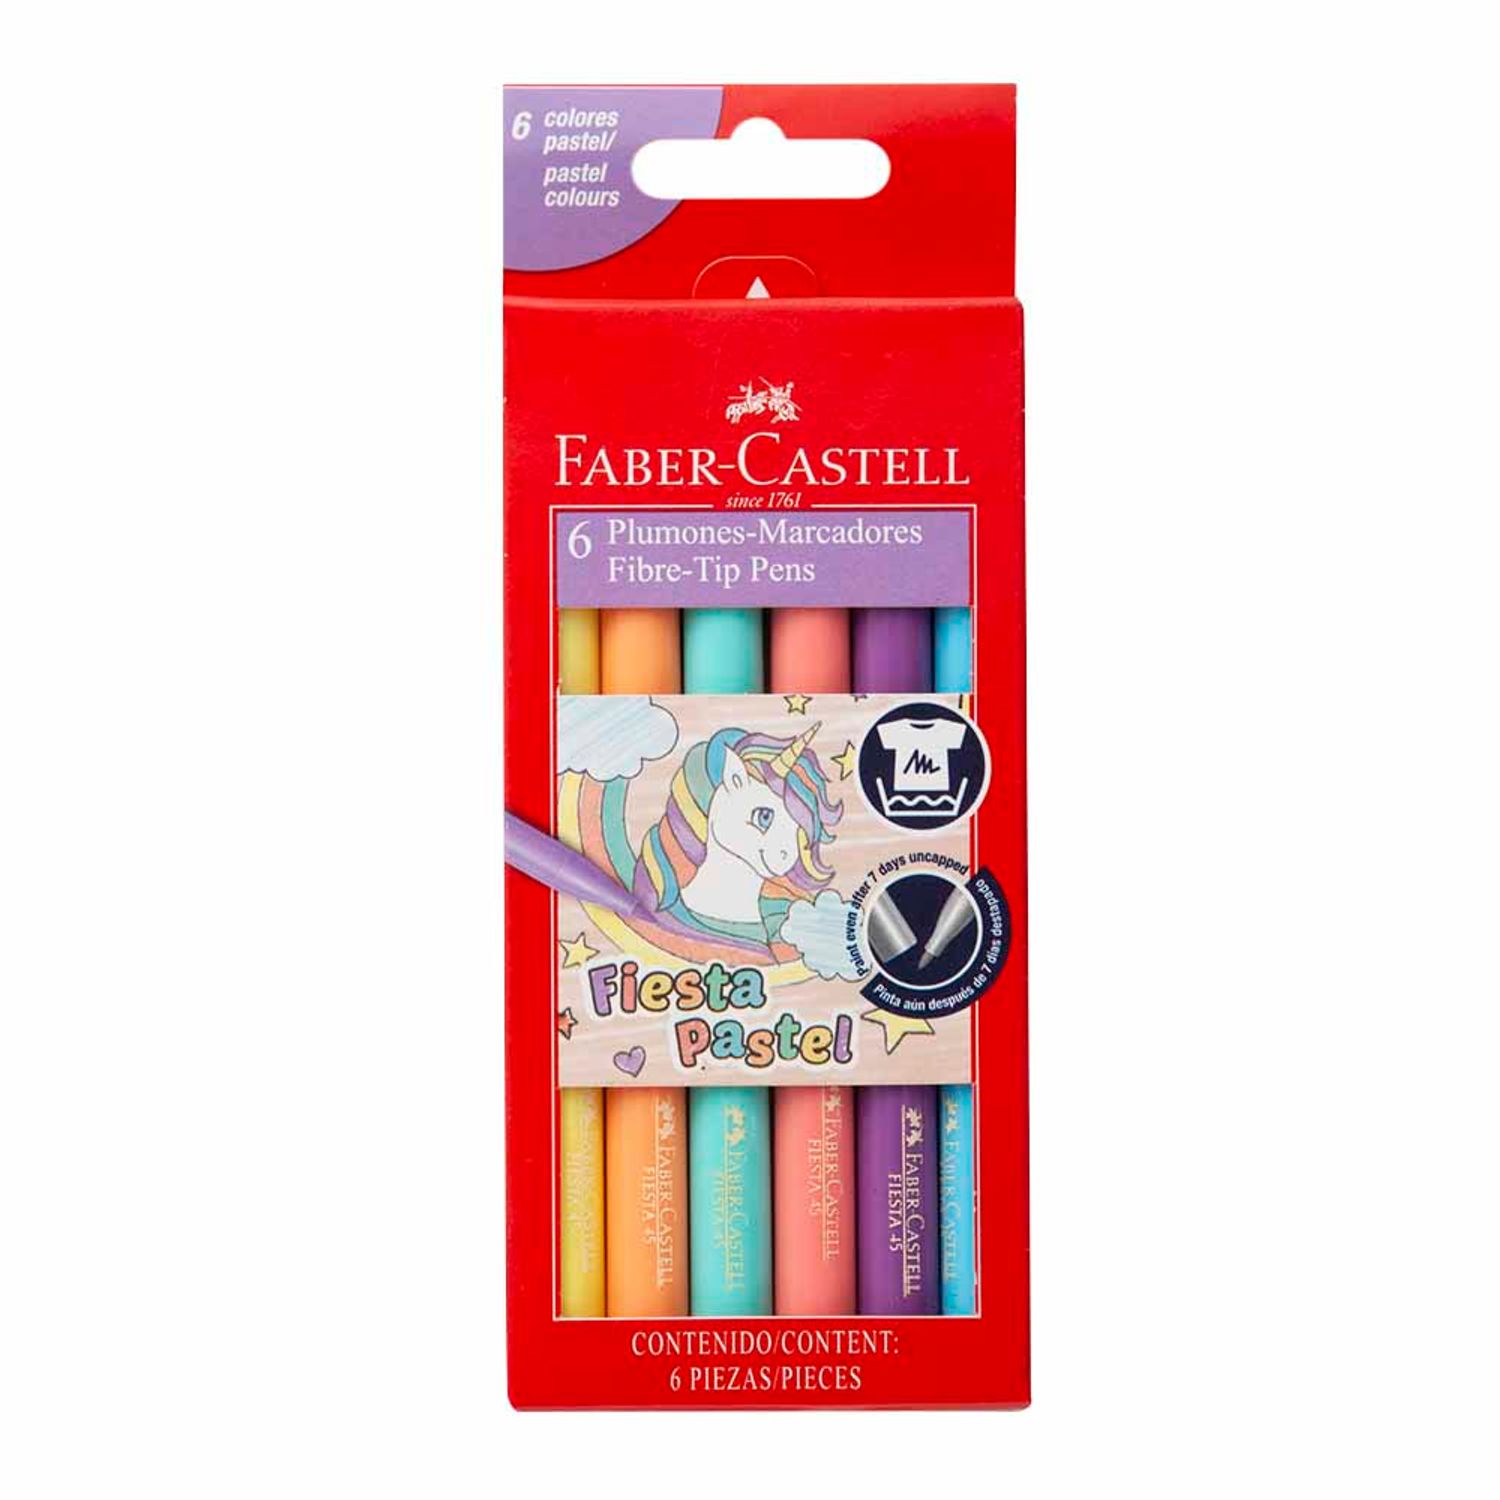 Caja-soporte con 60 lápices de colores Faber-Castell :: Faber